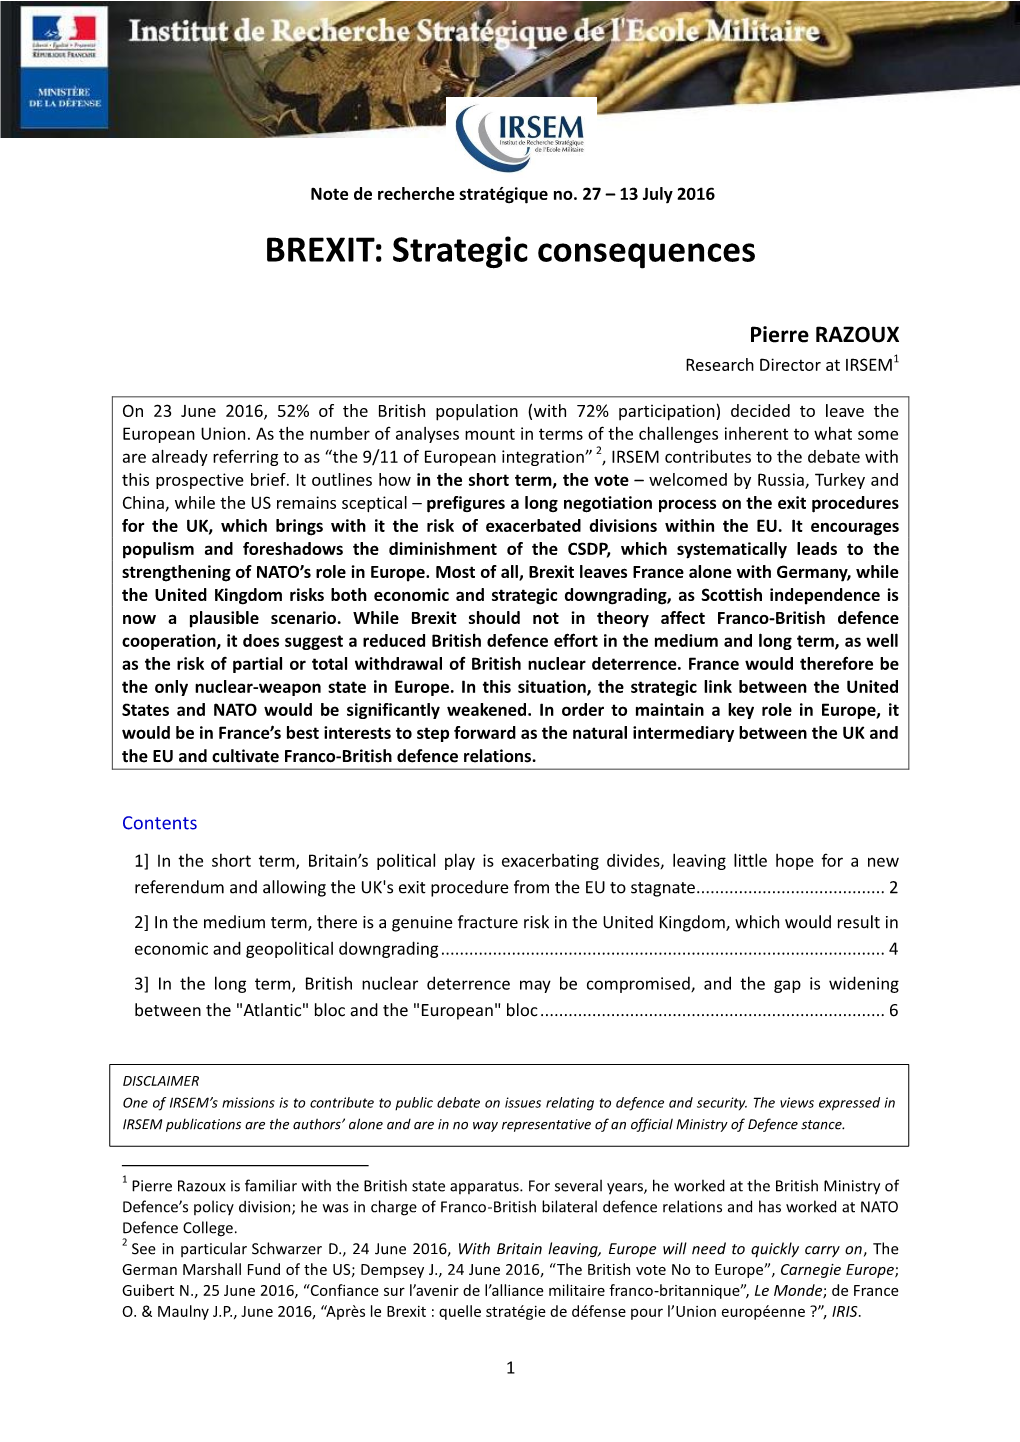 BREXIT: Strategic Consequences